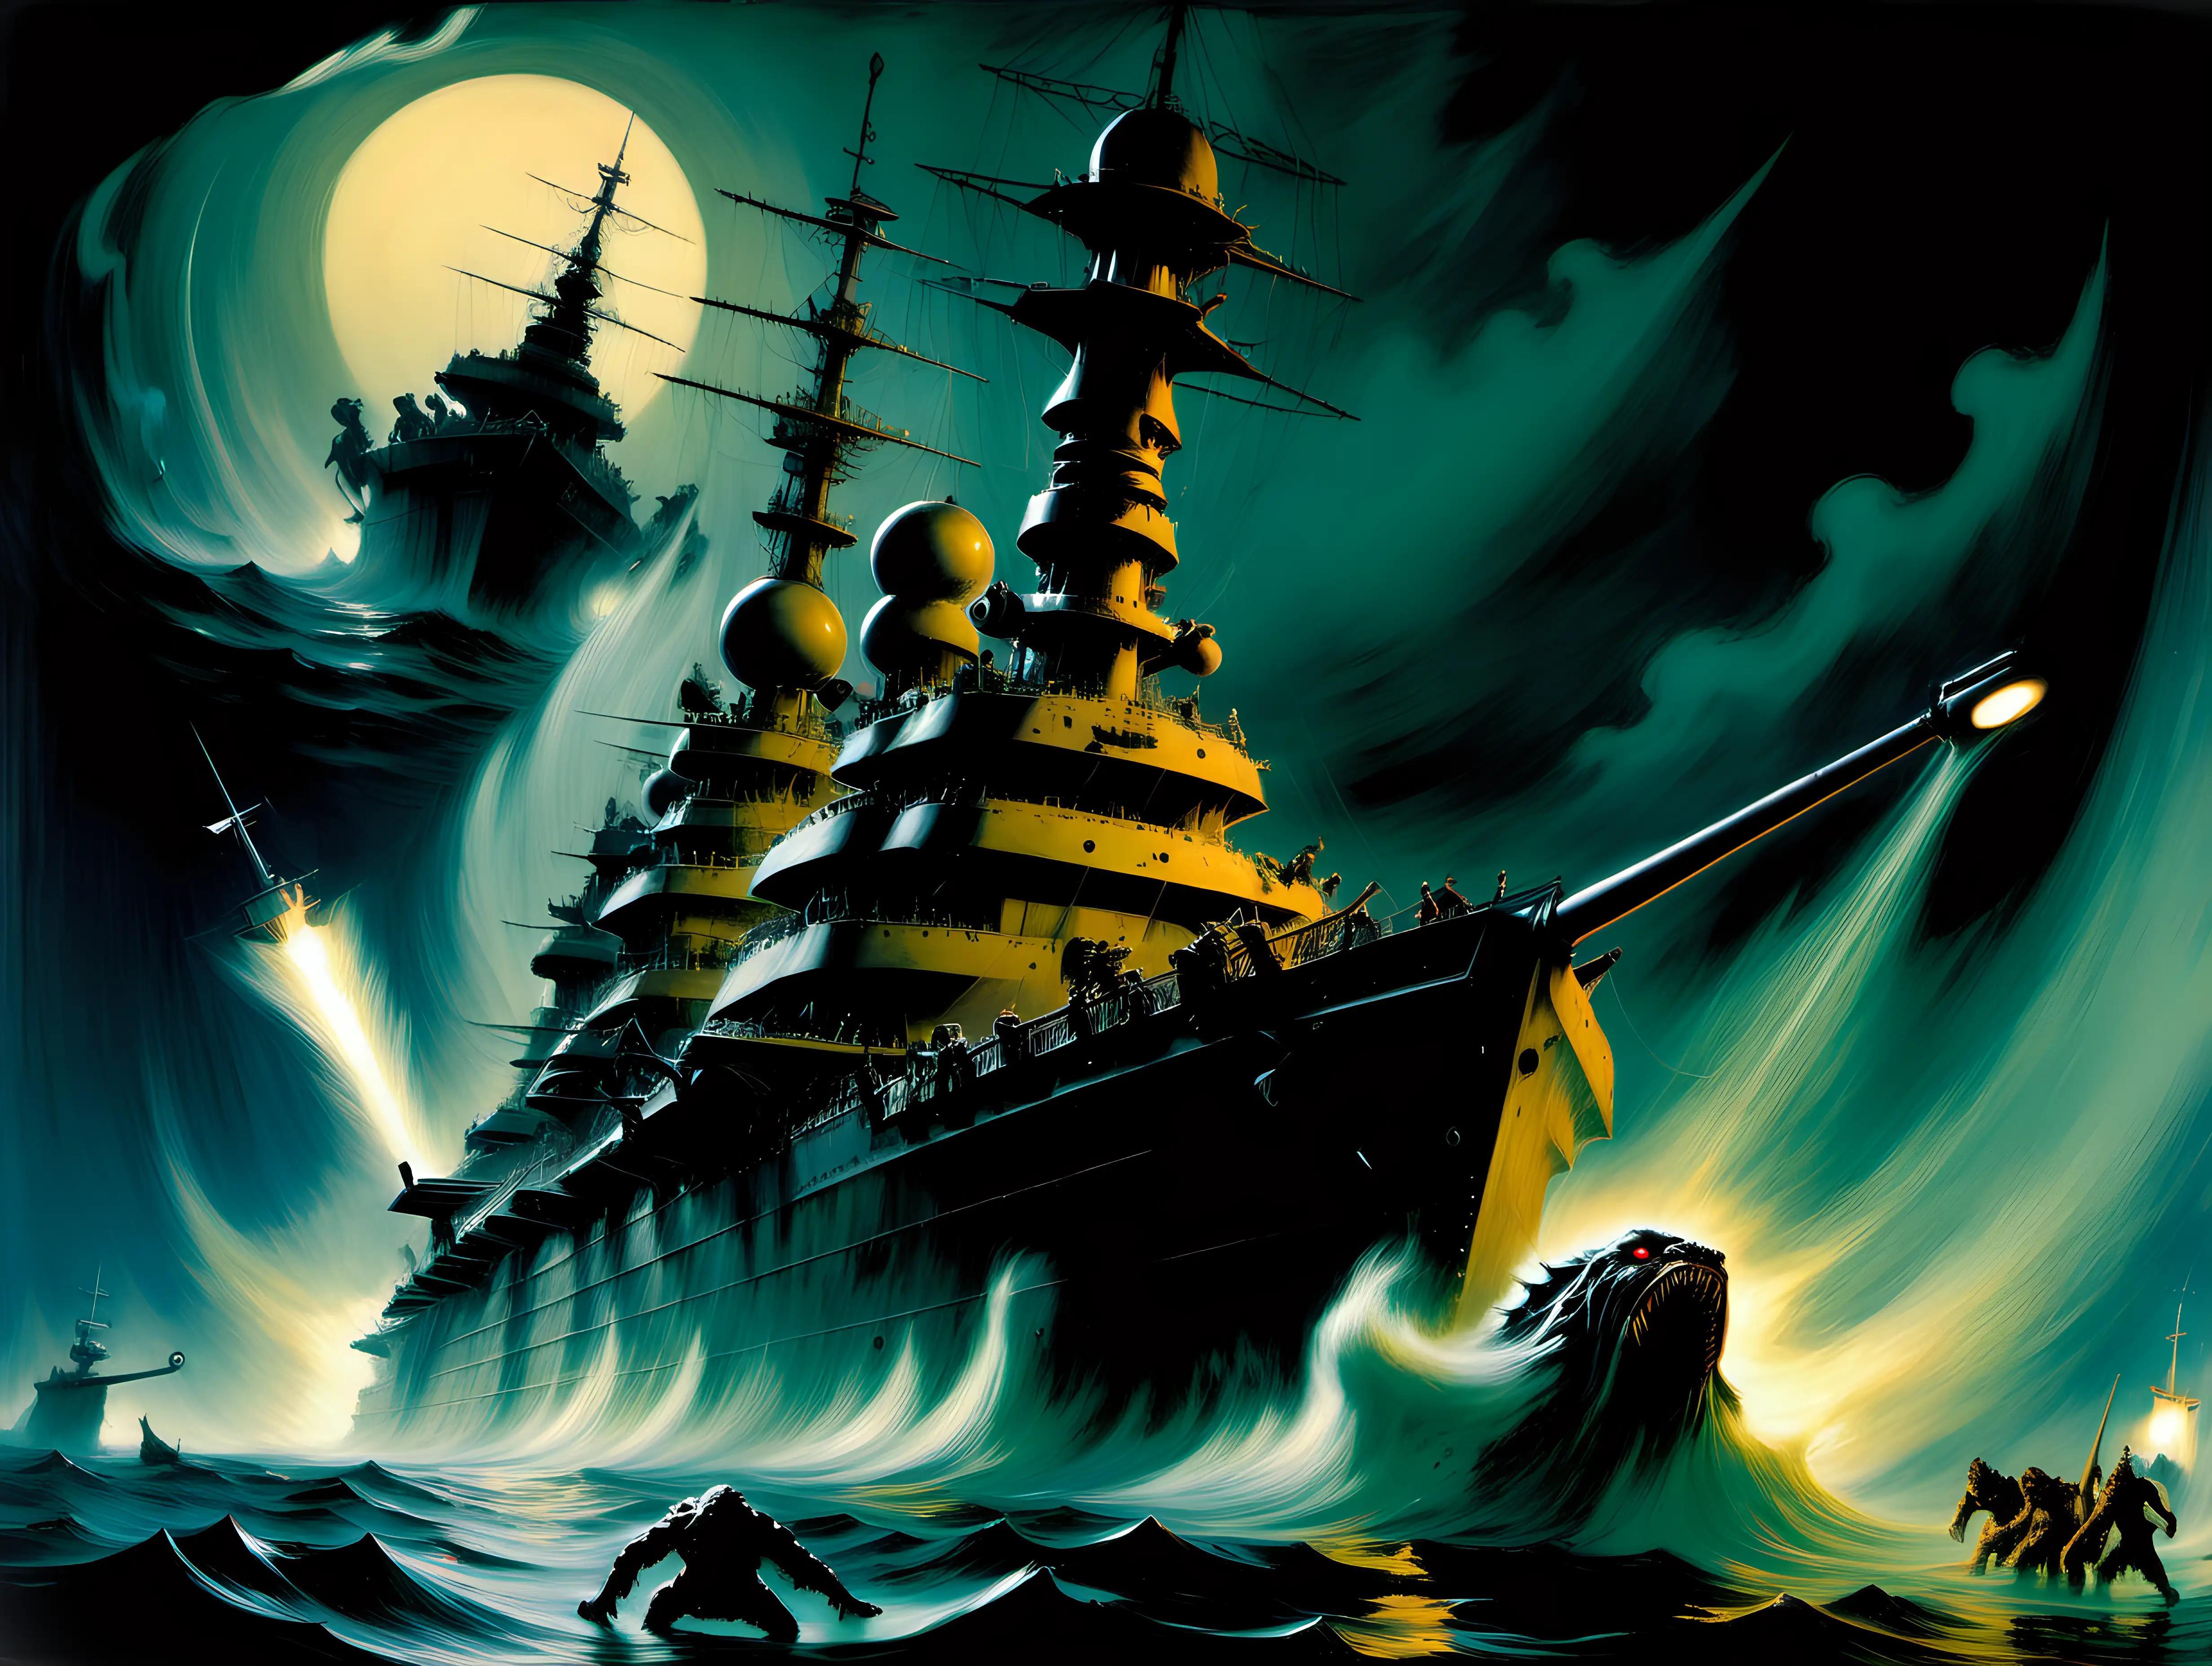 Monsters sinking a battleship at night Frank Frazetta style